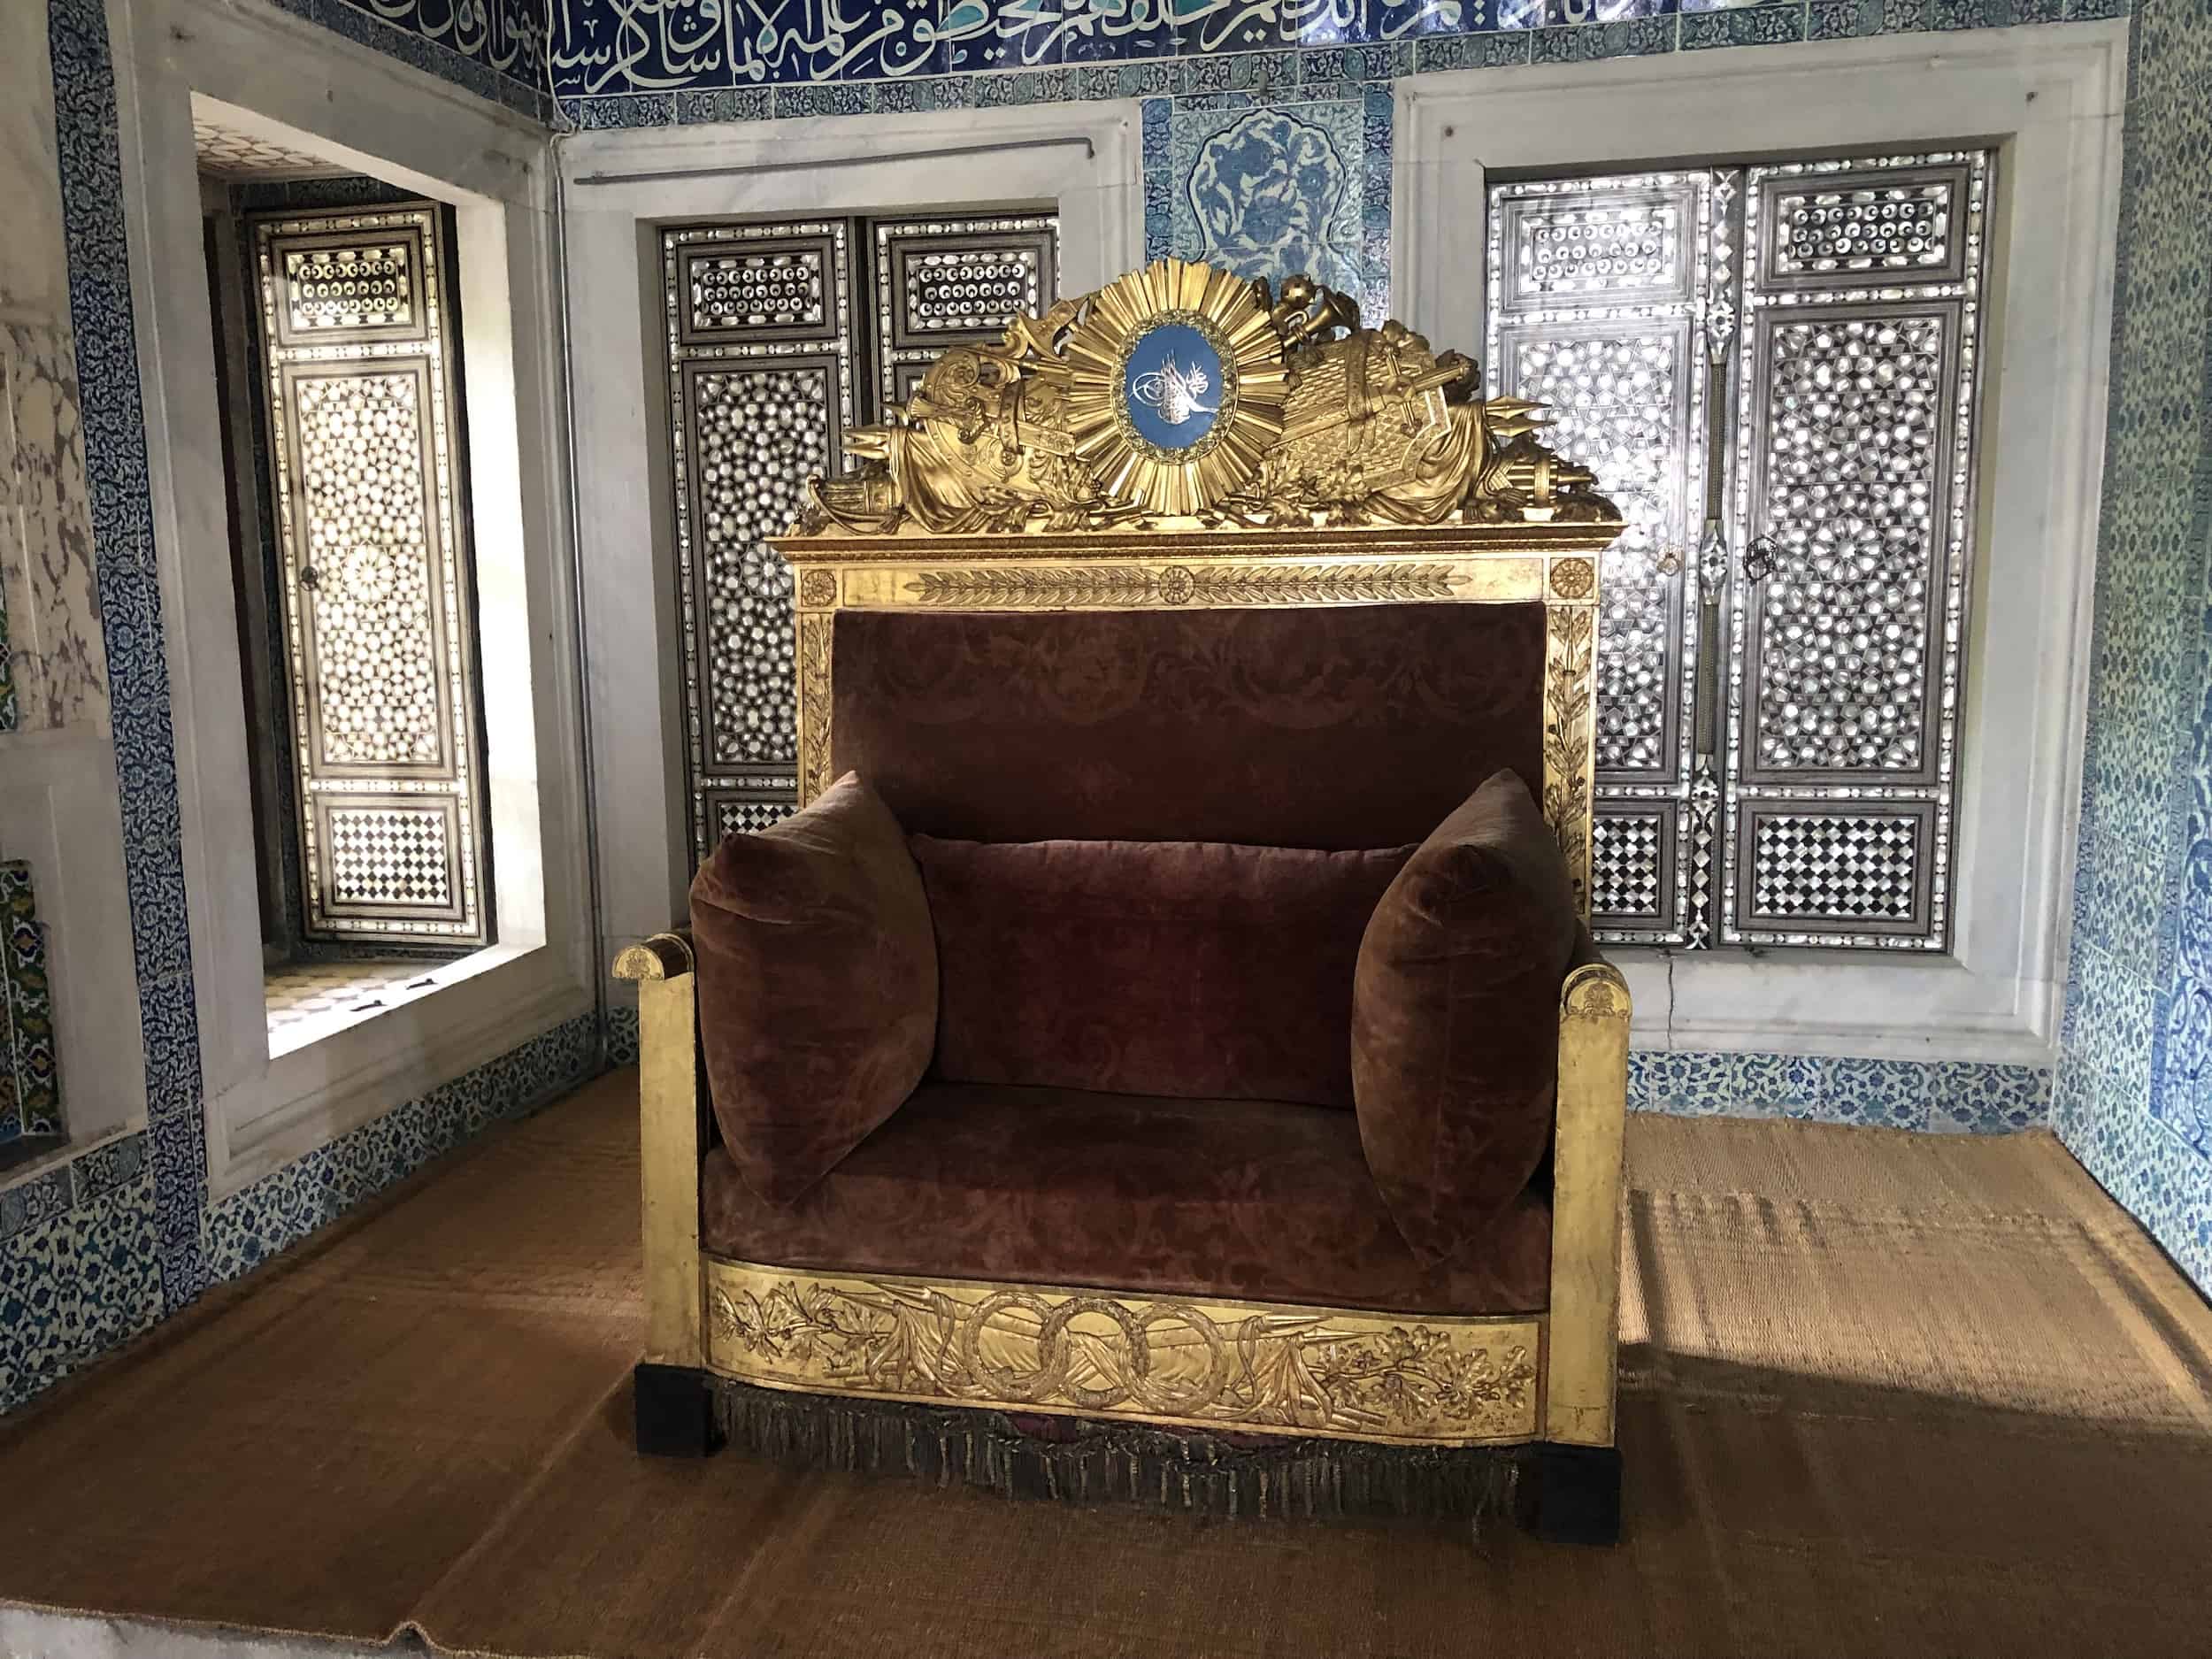 Throne of Sultan Mahmud II